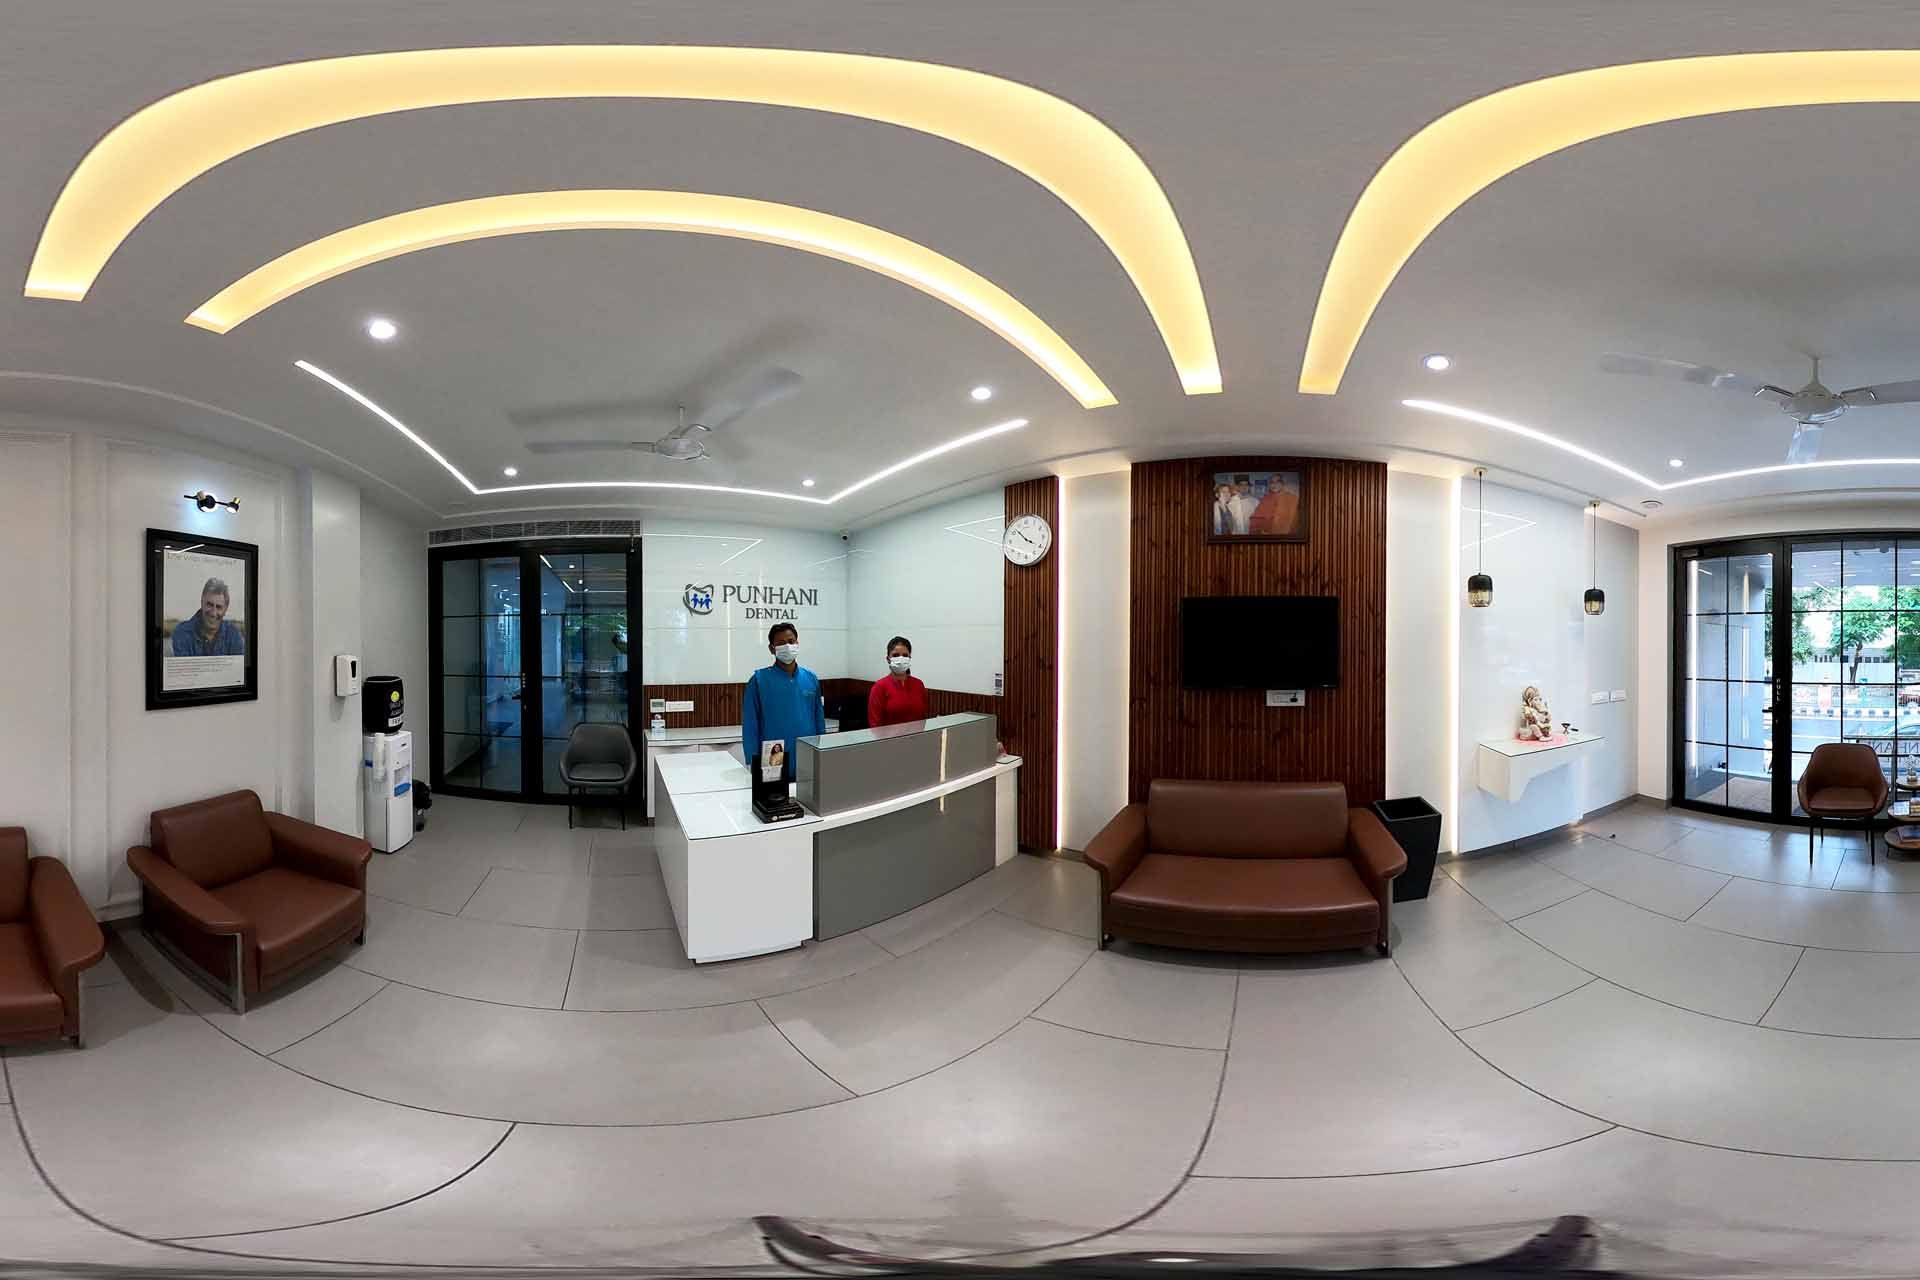 360° Virtual Tour of Punhani Dental Clinic, Vikaspuri, Delhi, INDIA